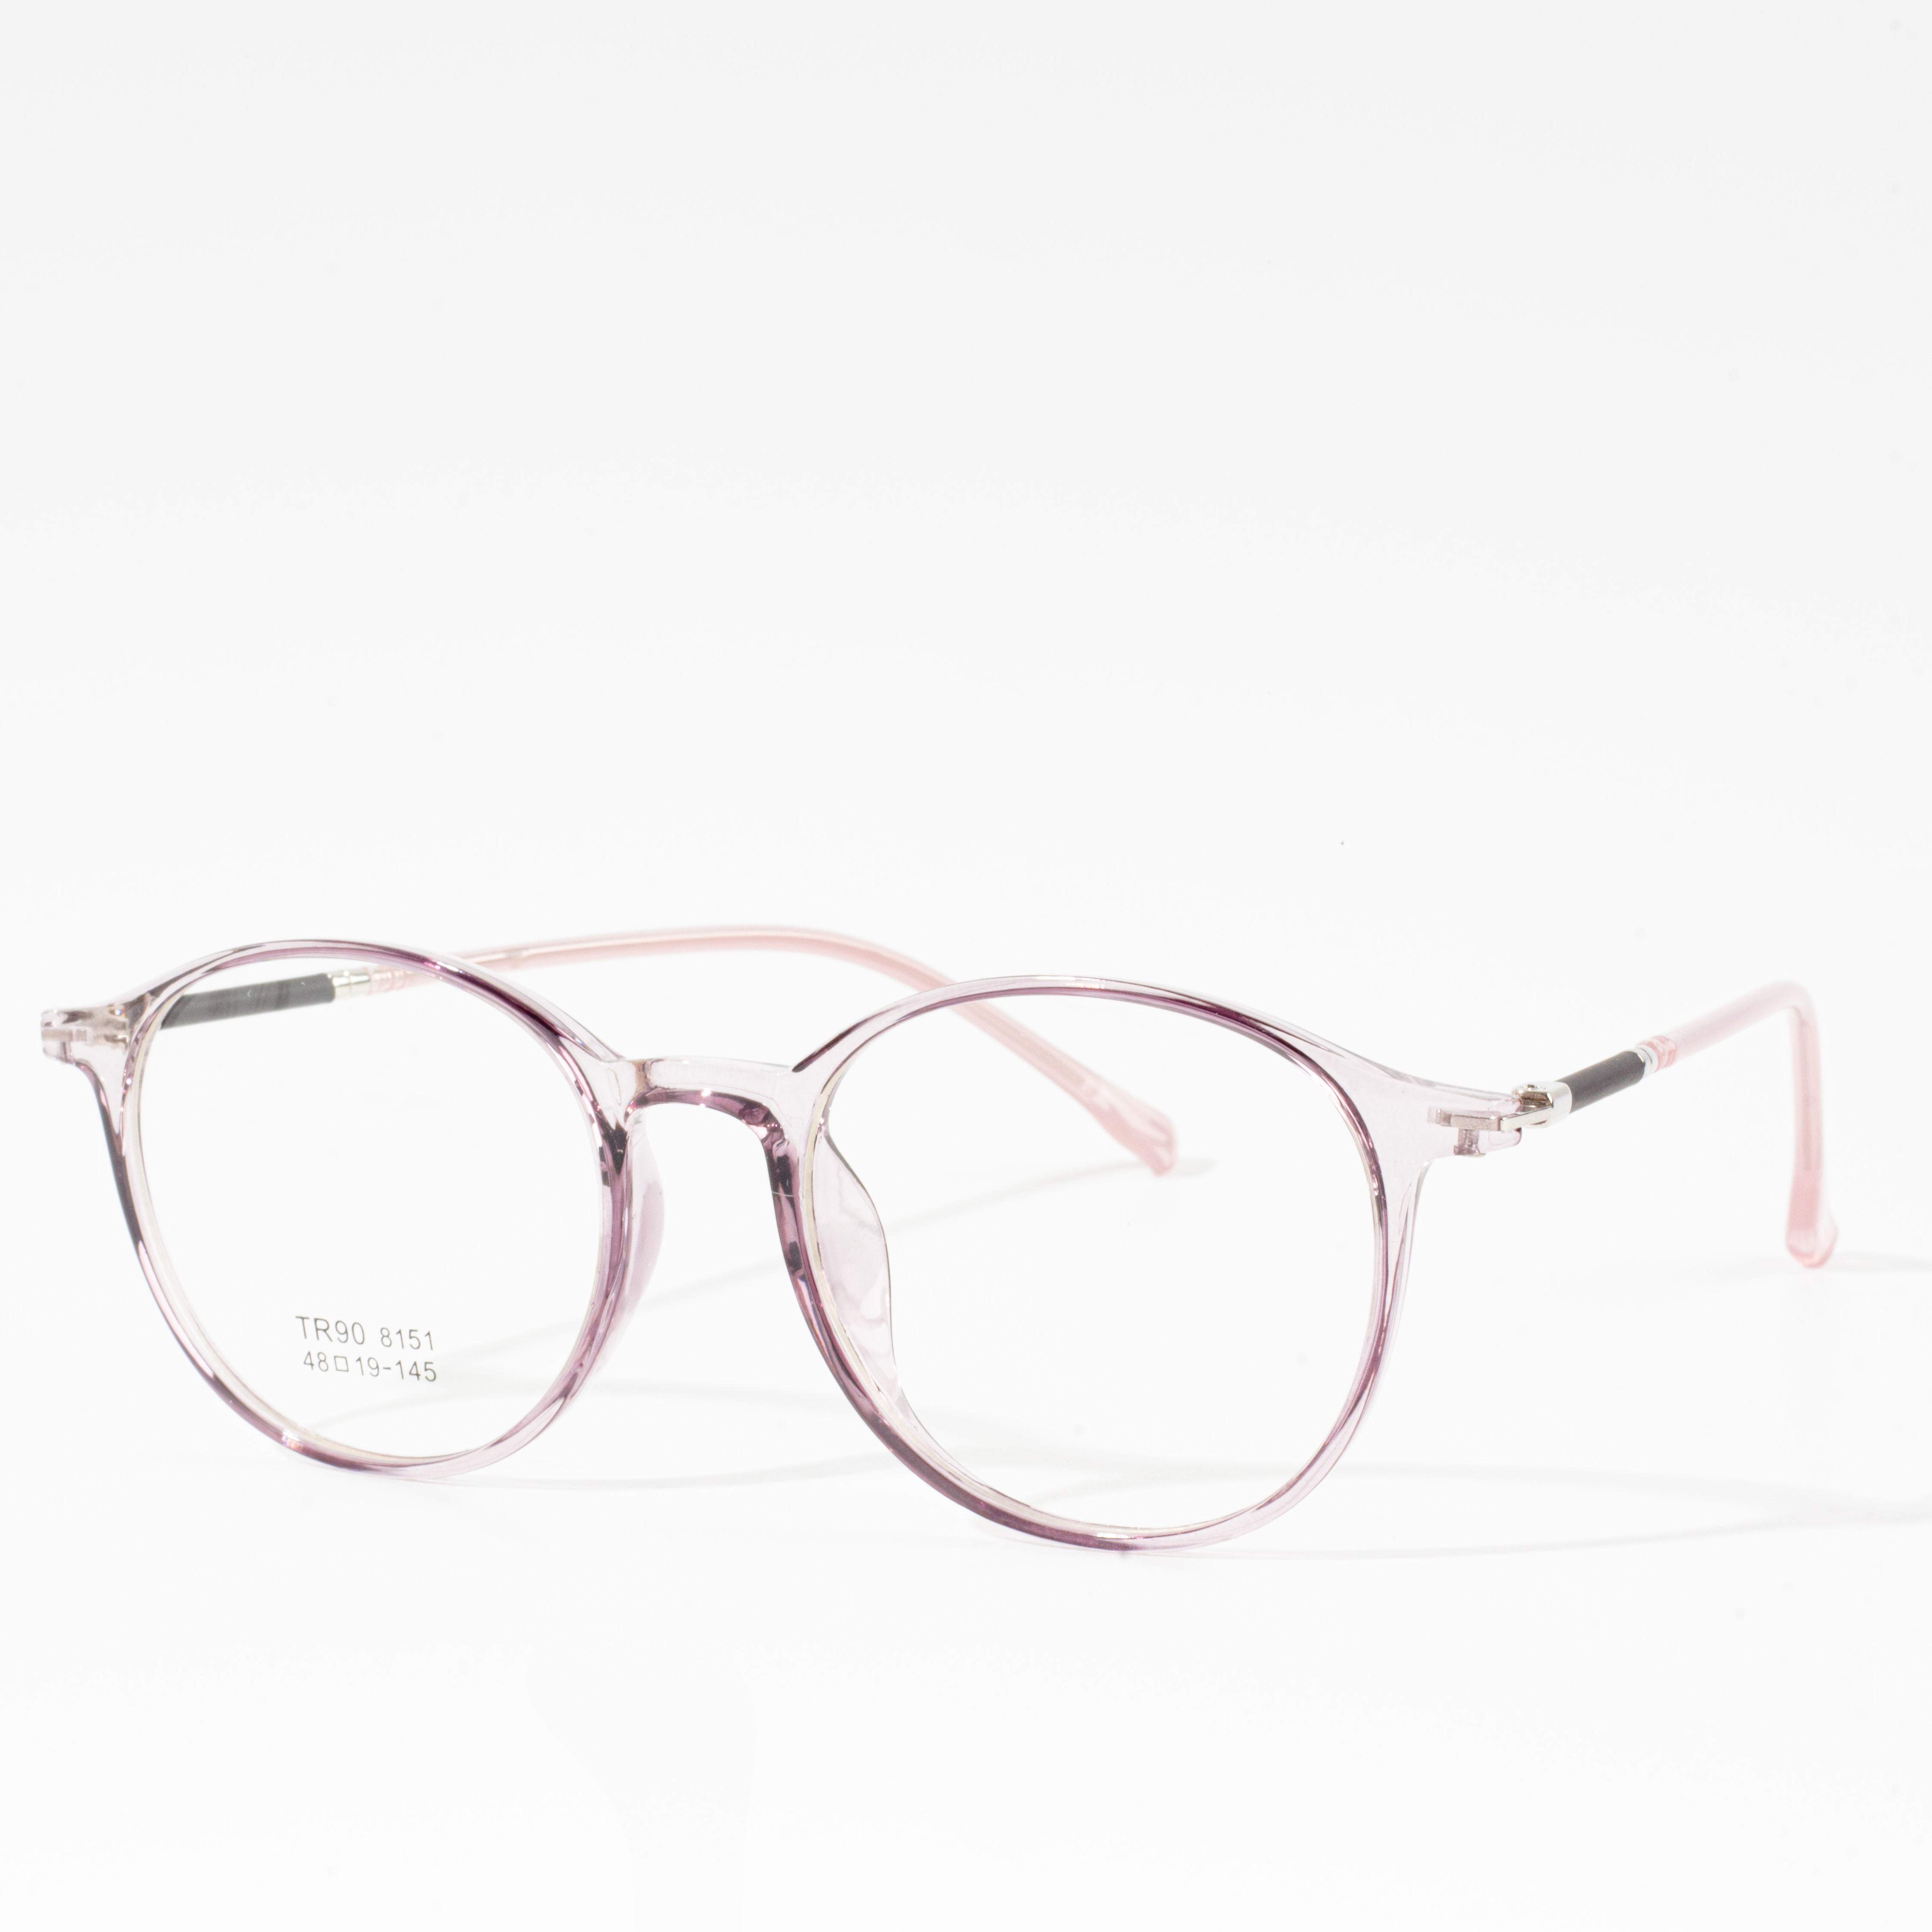 Mens & Womens Designer Frames - Eyeglasses.com 广告· https://www.eyeglasses.com/ (888) 896-3885 Shop Designer Frames From Top Global Eyeglass Brands For Half Off Retail Prices Nhasi.